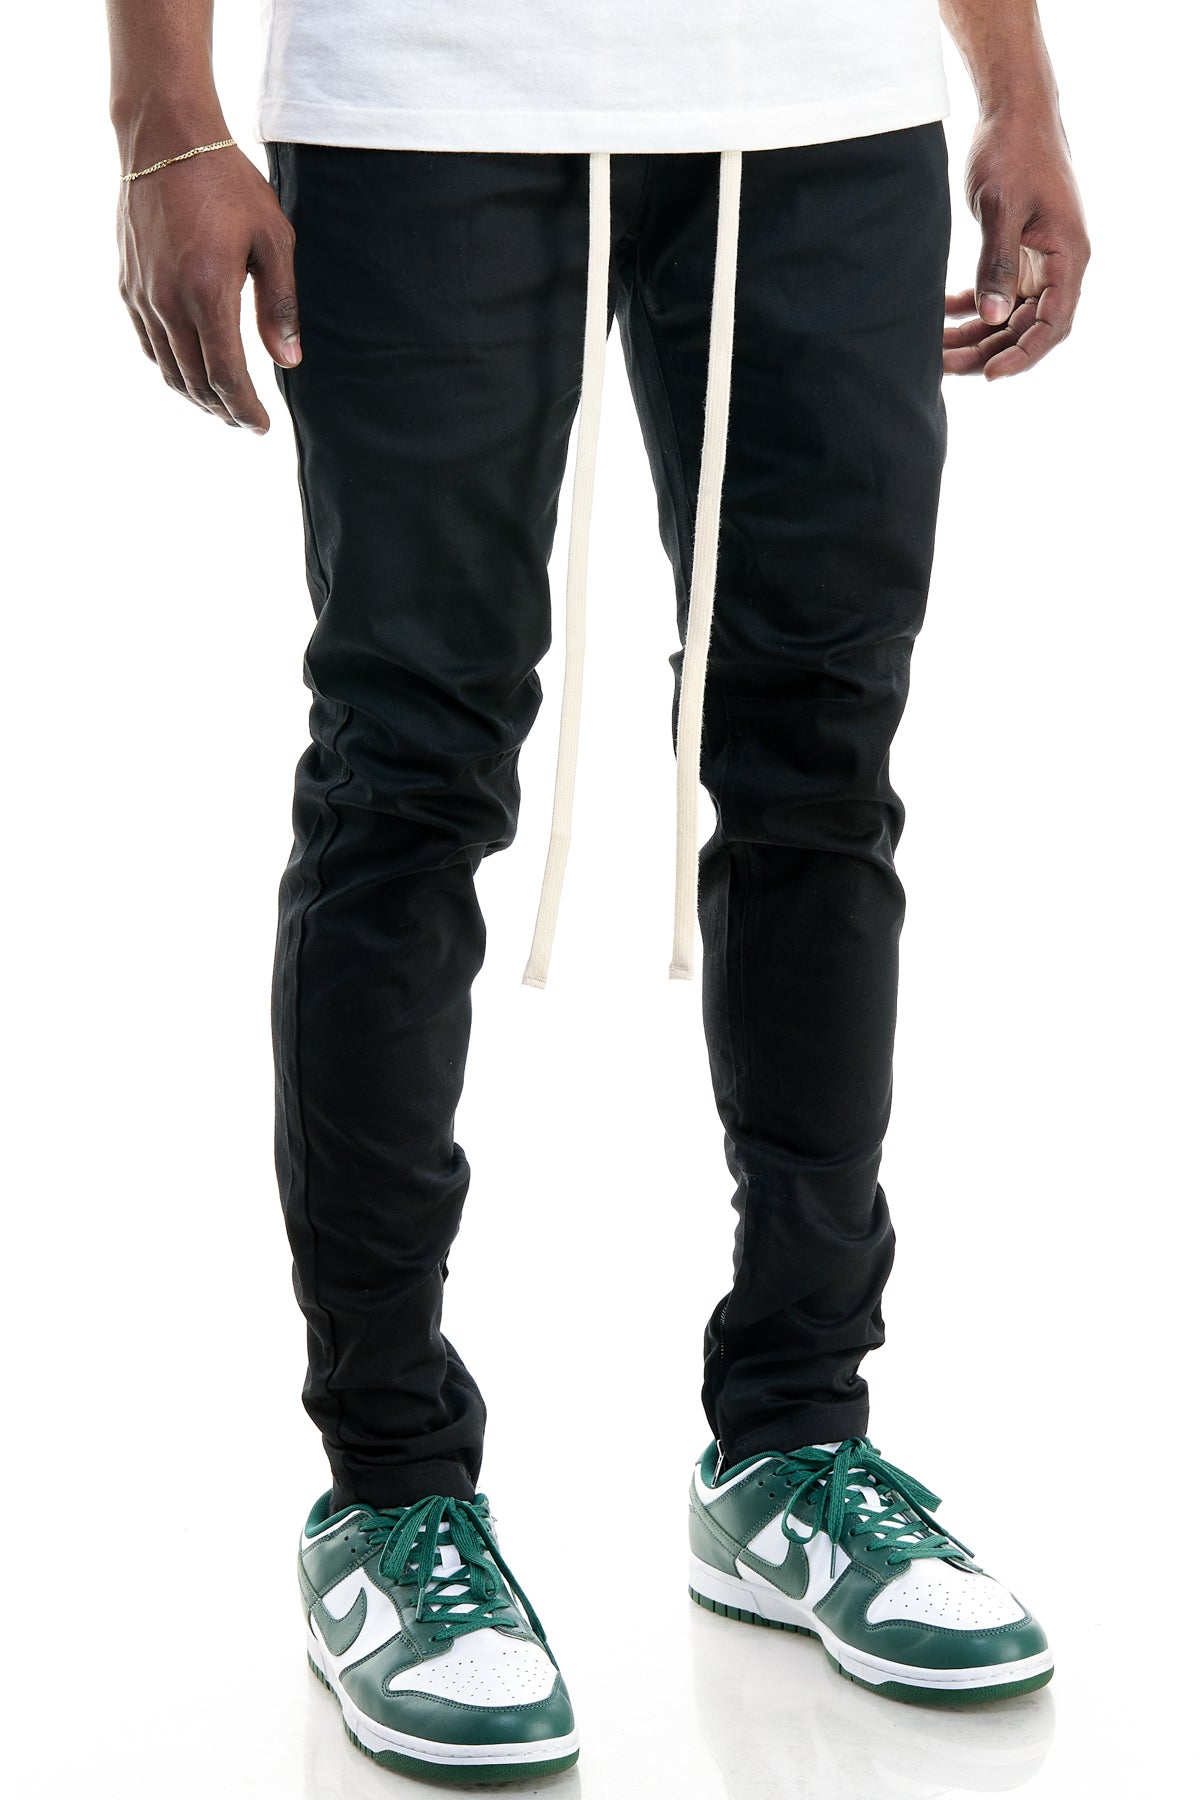 FOG American striped black hip-hop ankle zipper sweatpants. at Rs 2099.00 |  Men Regular Fit Trousers, Men Formal Pants, पुरुषों की पैंट - Miss Merylin,  Imphal | ID: 2852677845991